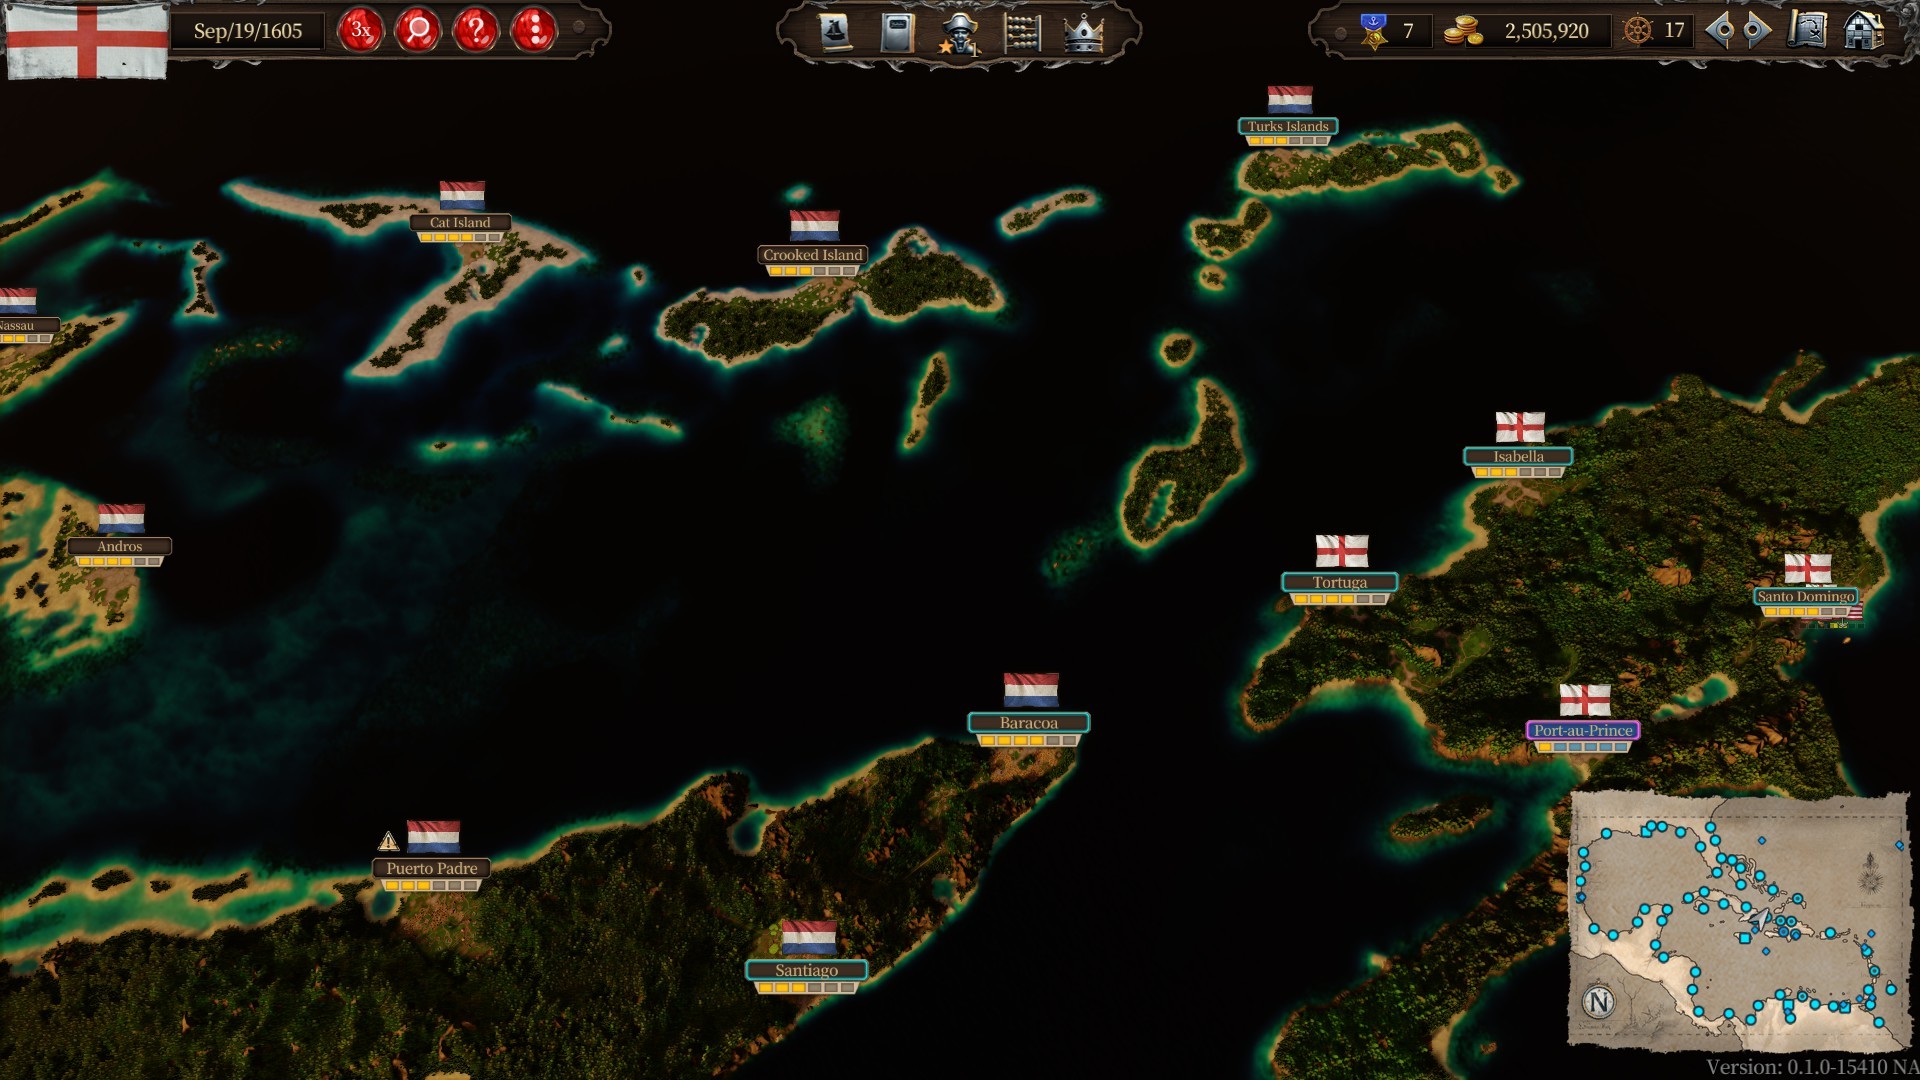  Port Royale 4 screenshot 2